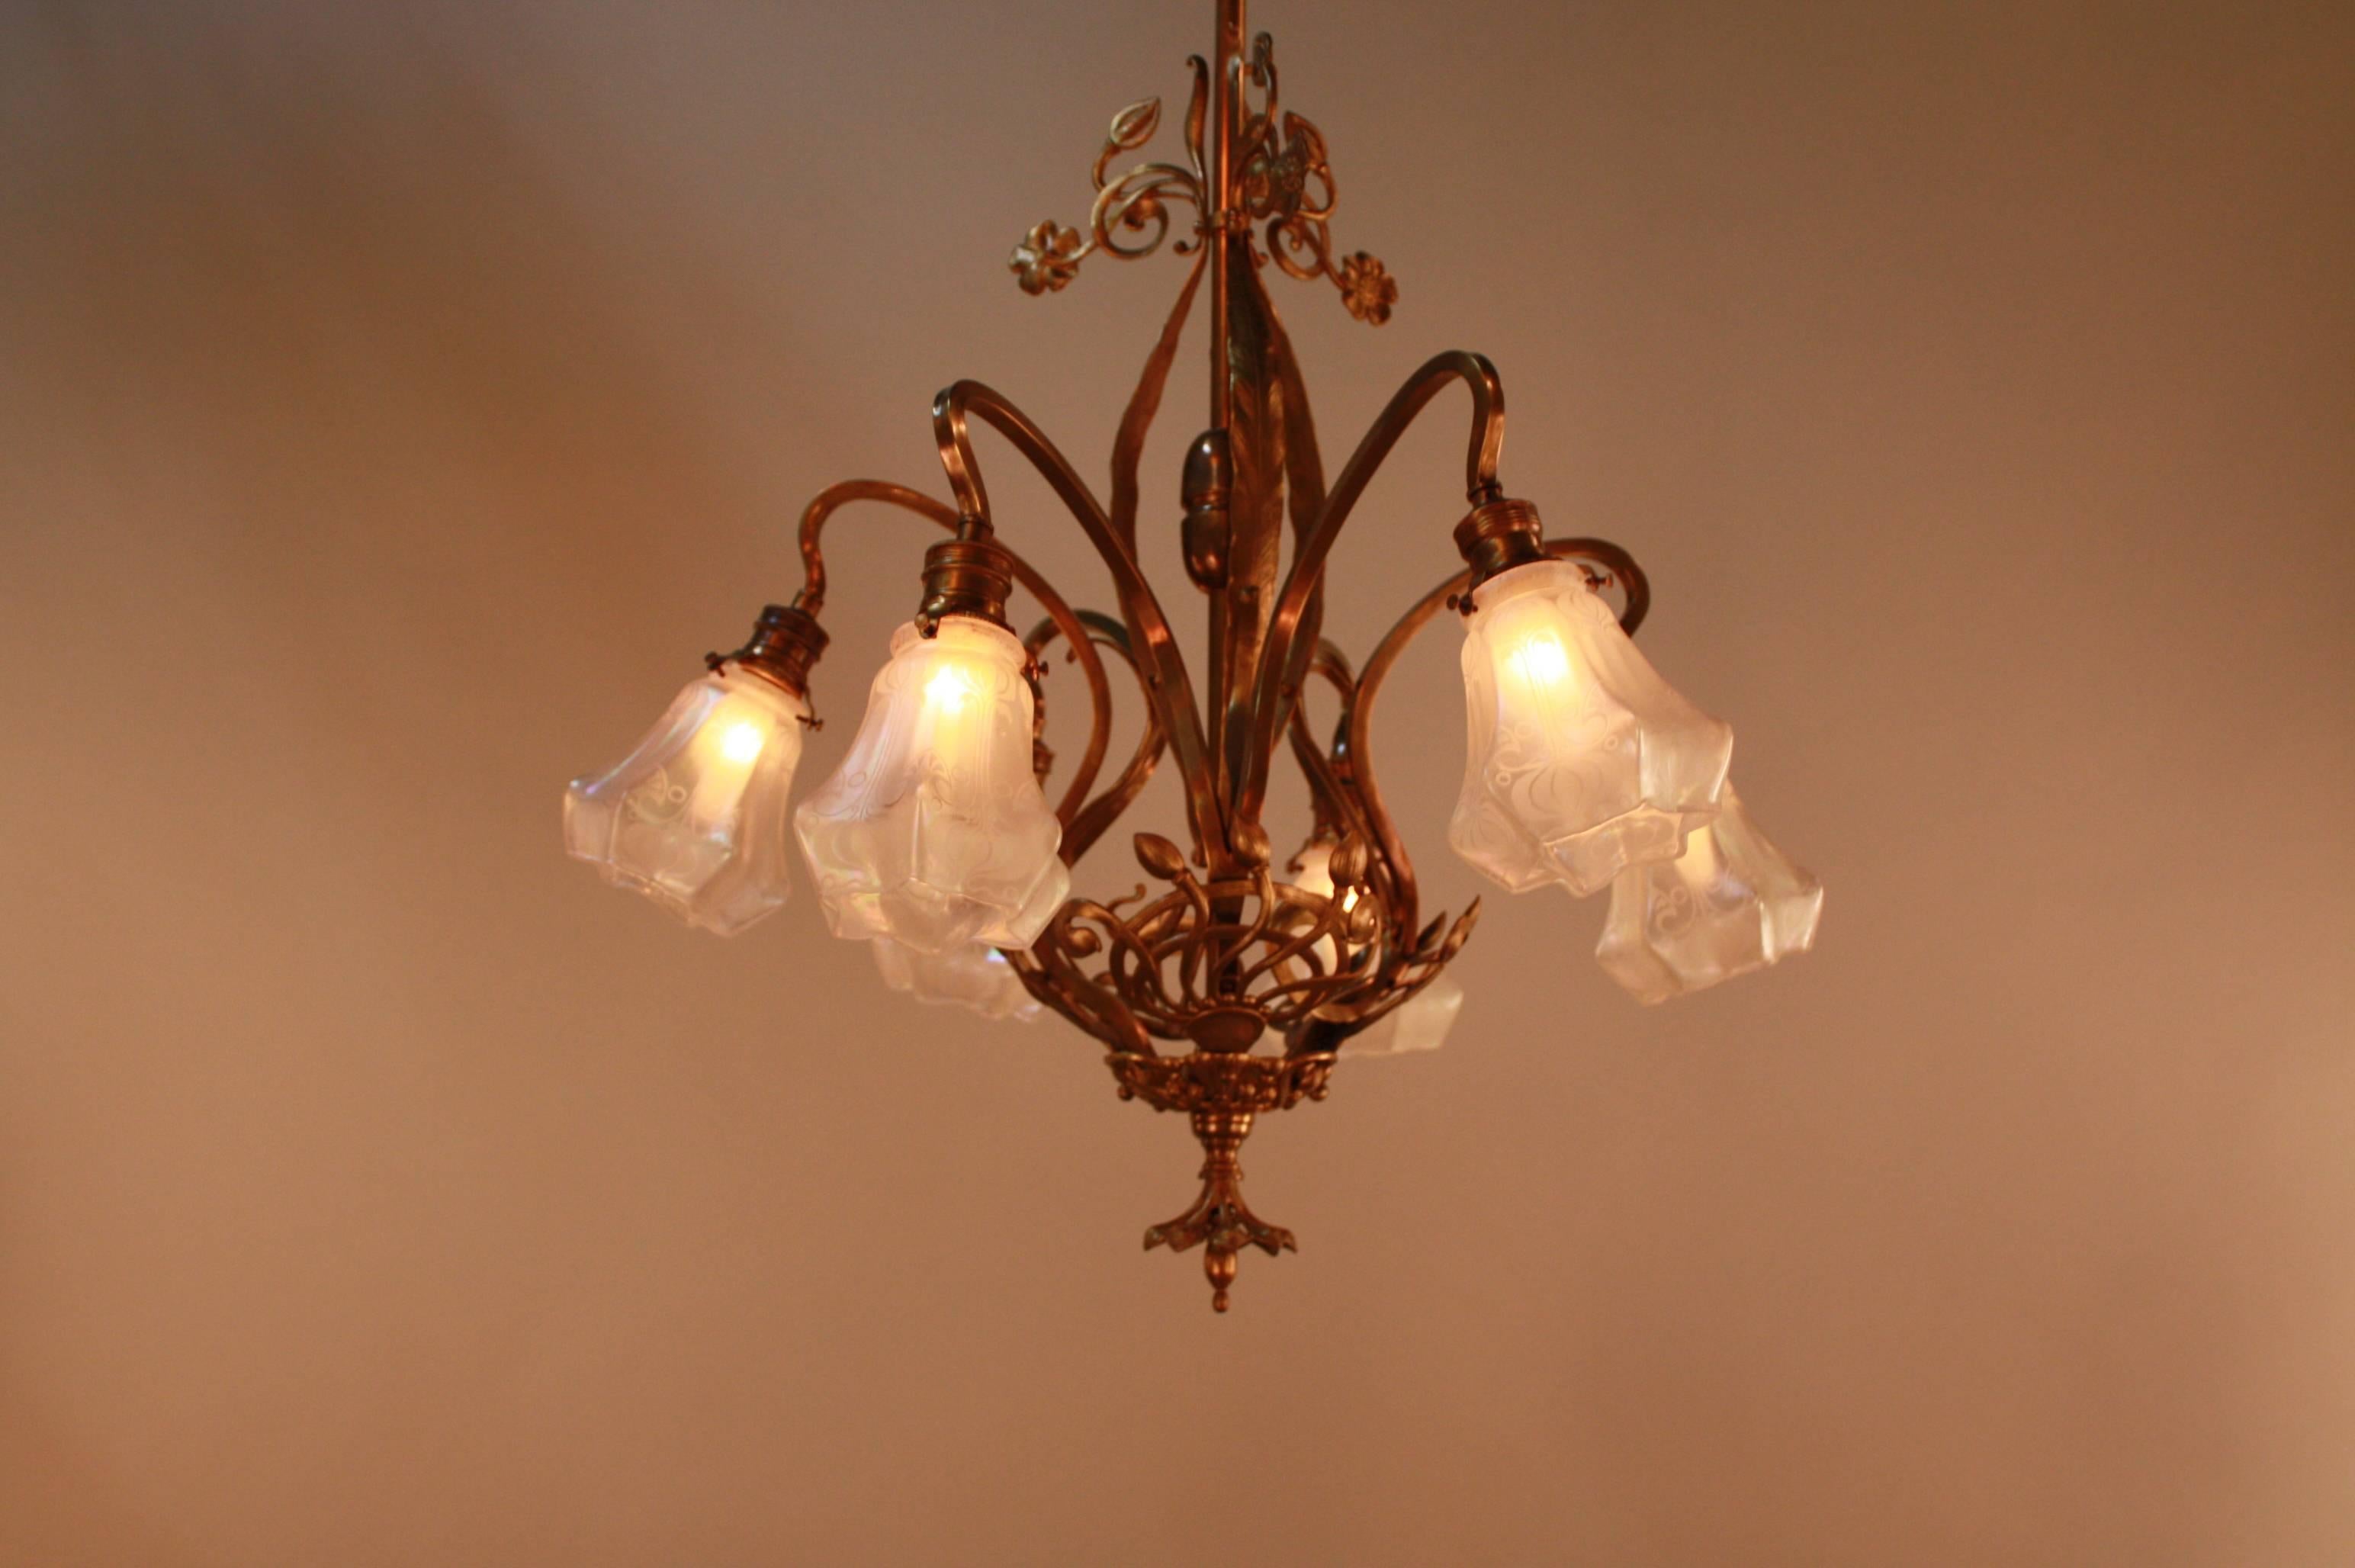 A fabulous Art Nouveau chandelier. An elegant bronze with organic and flora design characteristic of the Art Nouveau period. Features acid etched indecent glass shades.